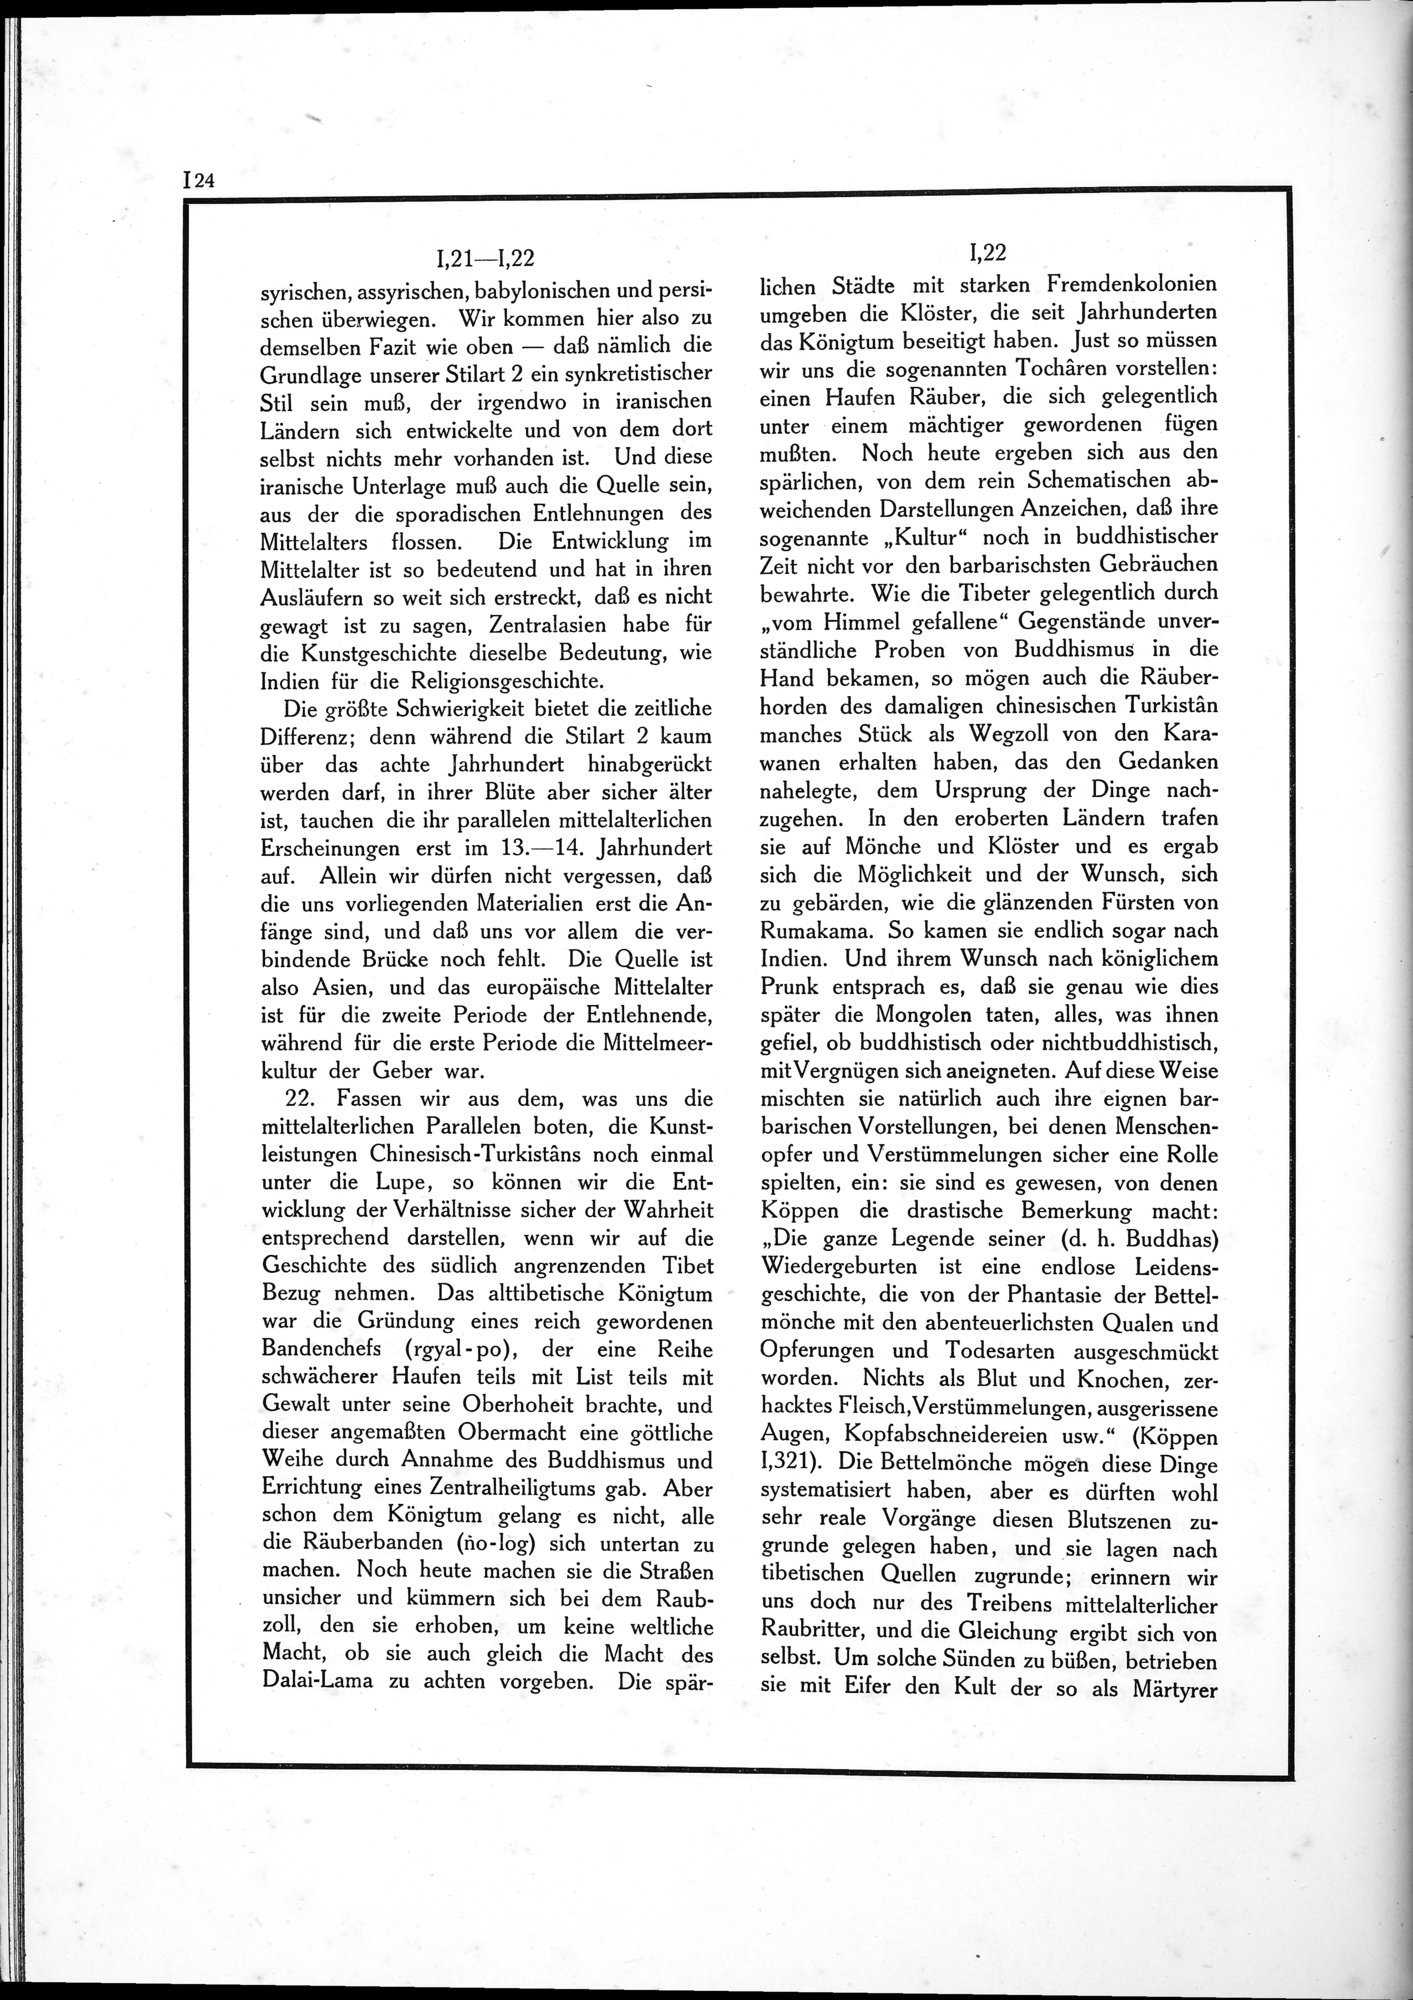 Alt-Kutscha : vol.1 / Page 36 (Grayscale High Resolution Image)